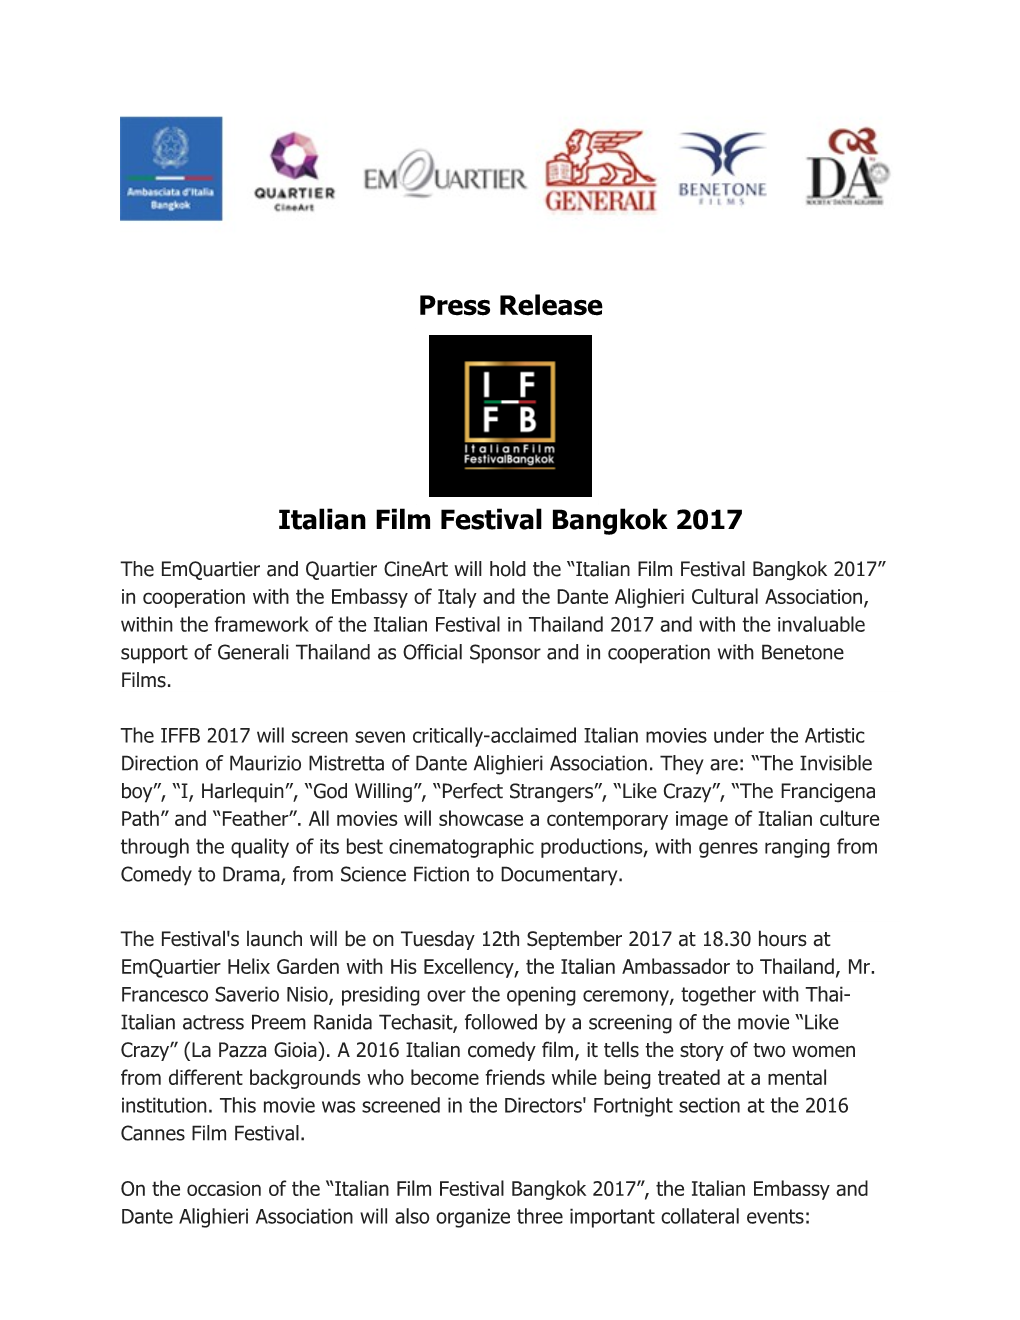 Italian Film Festival Bangkok 2017